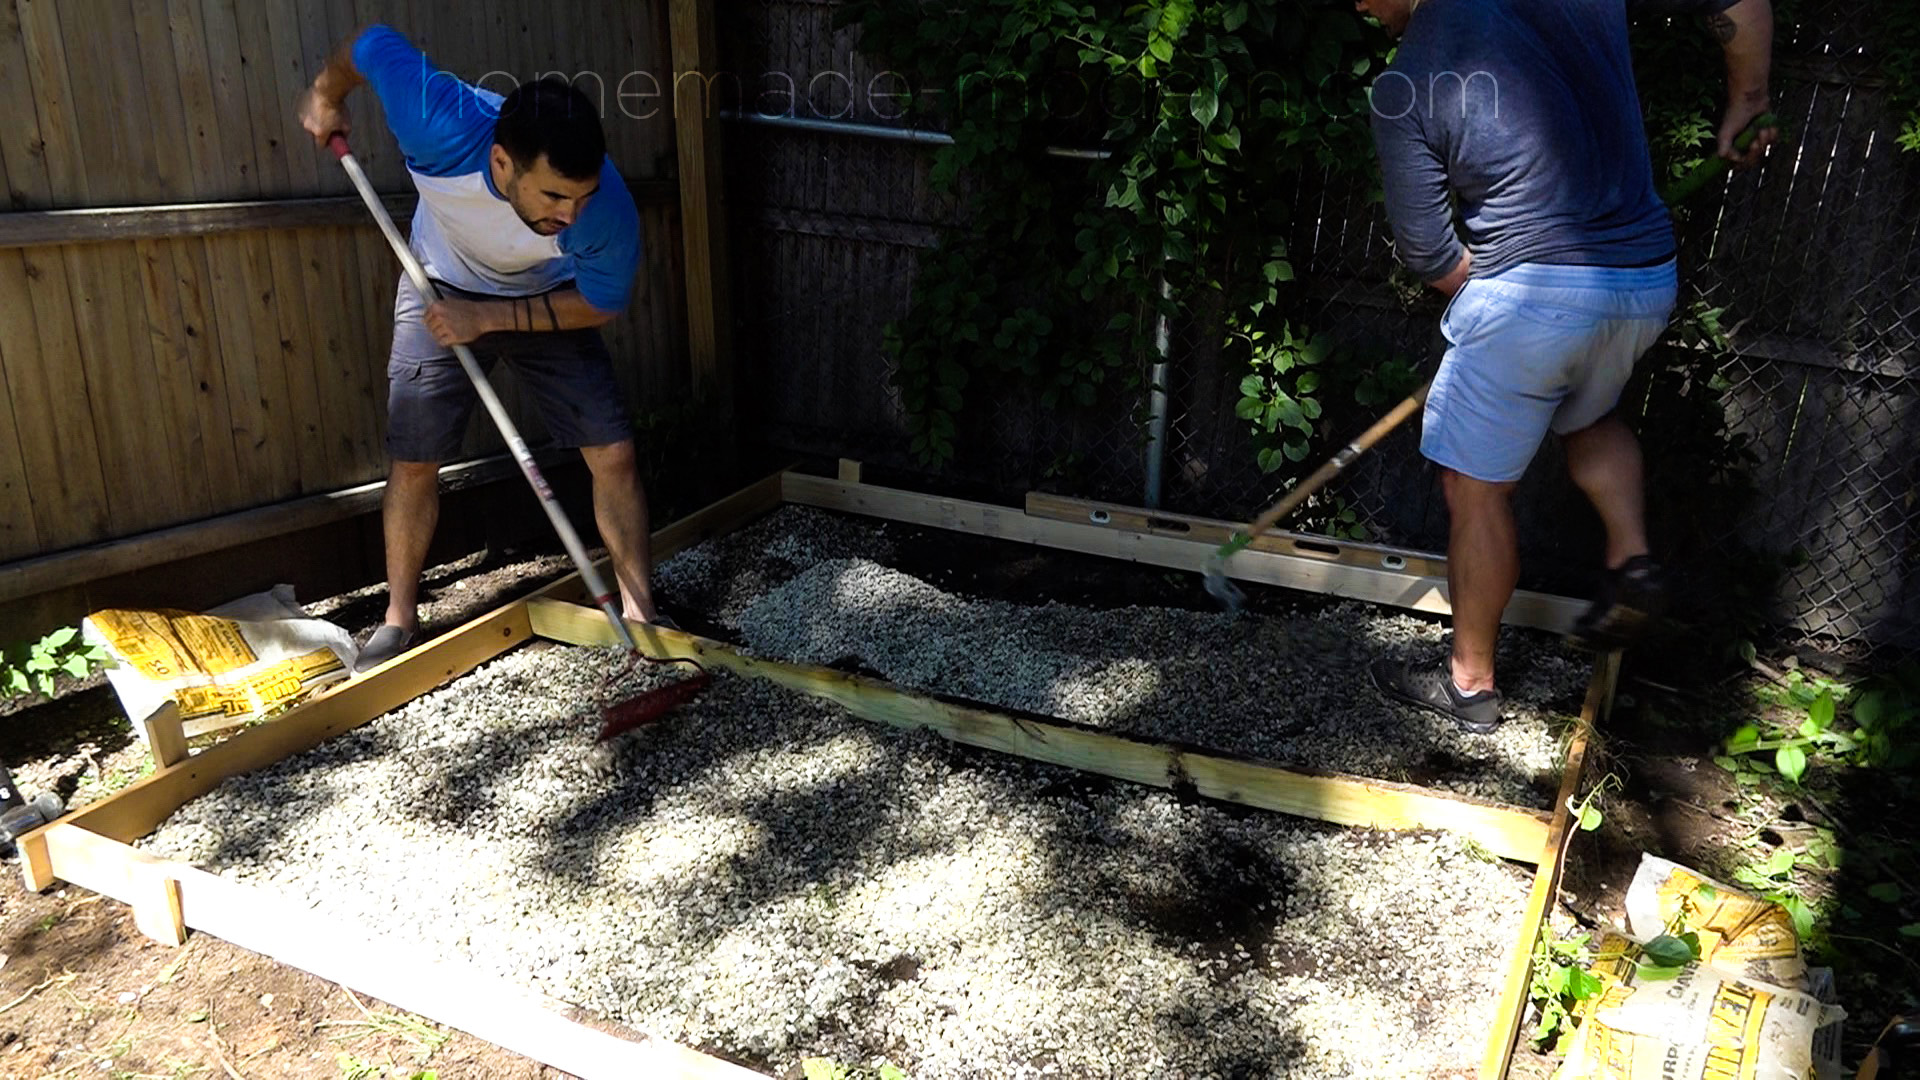 Ben Uyeda builds a concrete slab foundation for a tool shed. For more information go to HomeMade-Modern.com